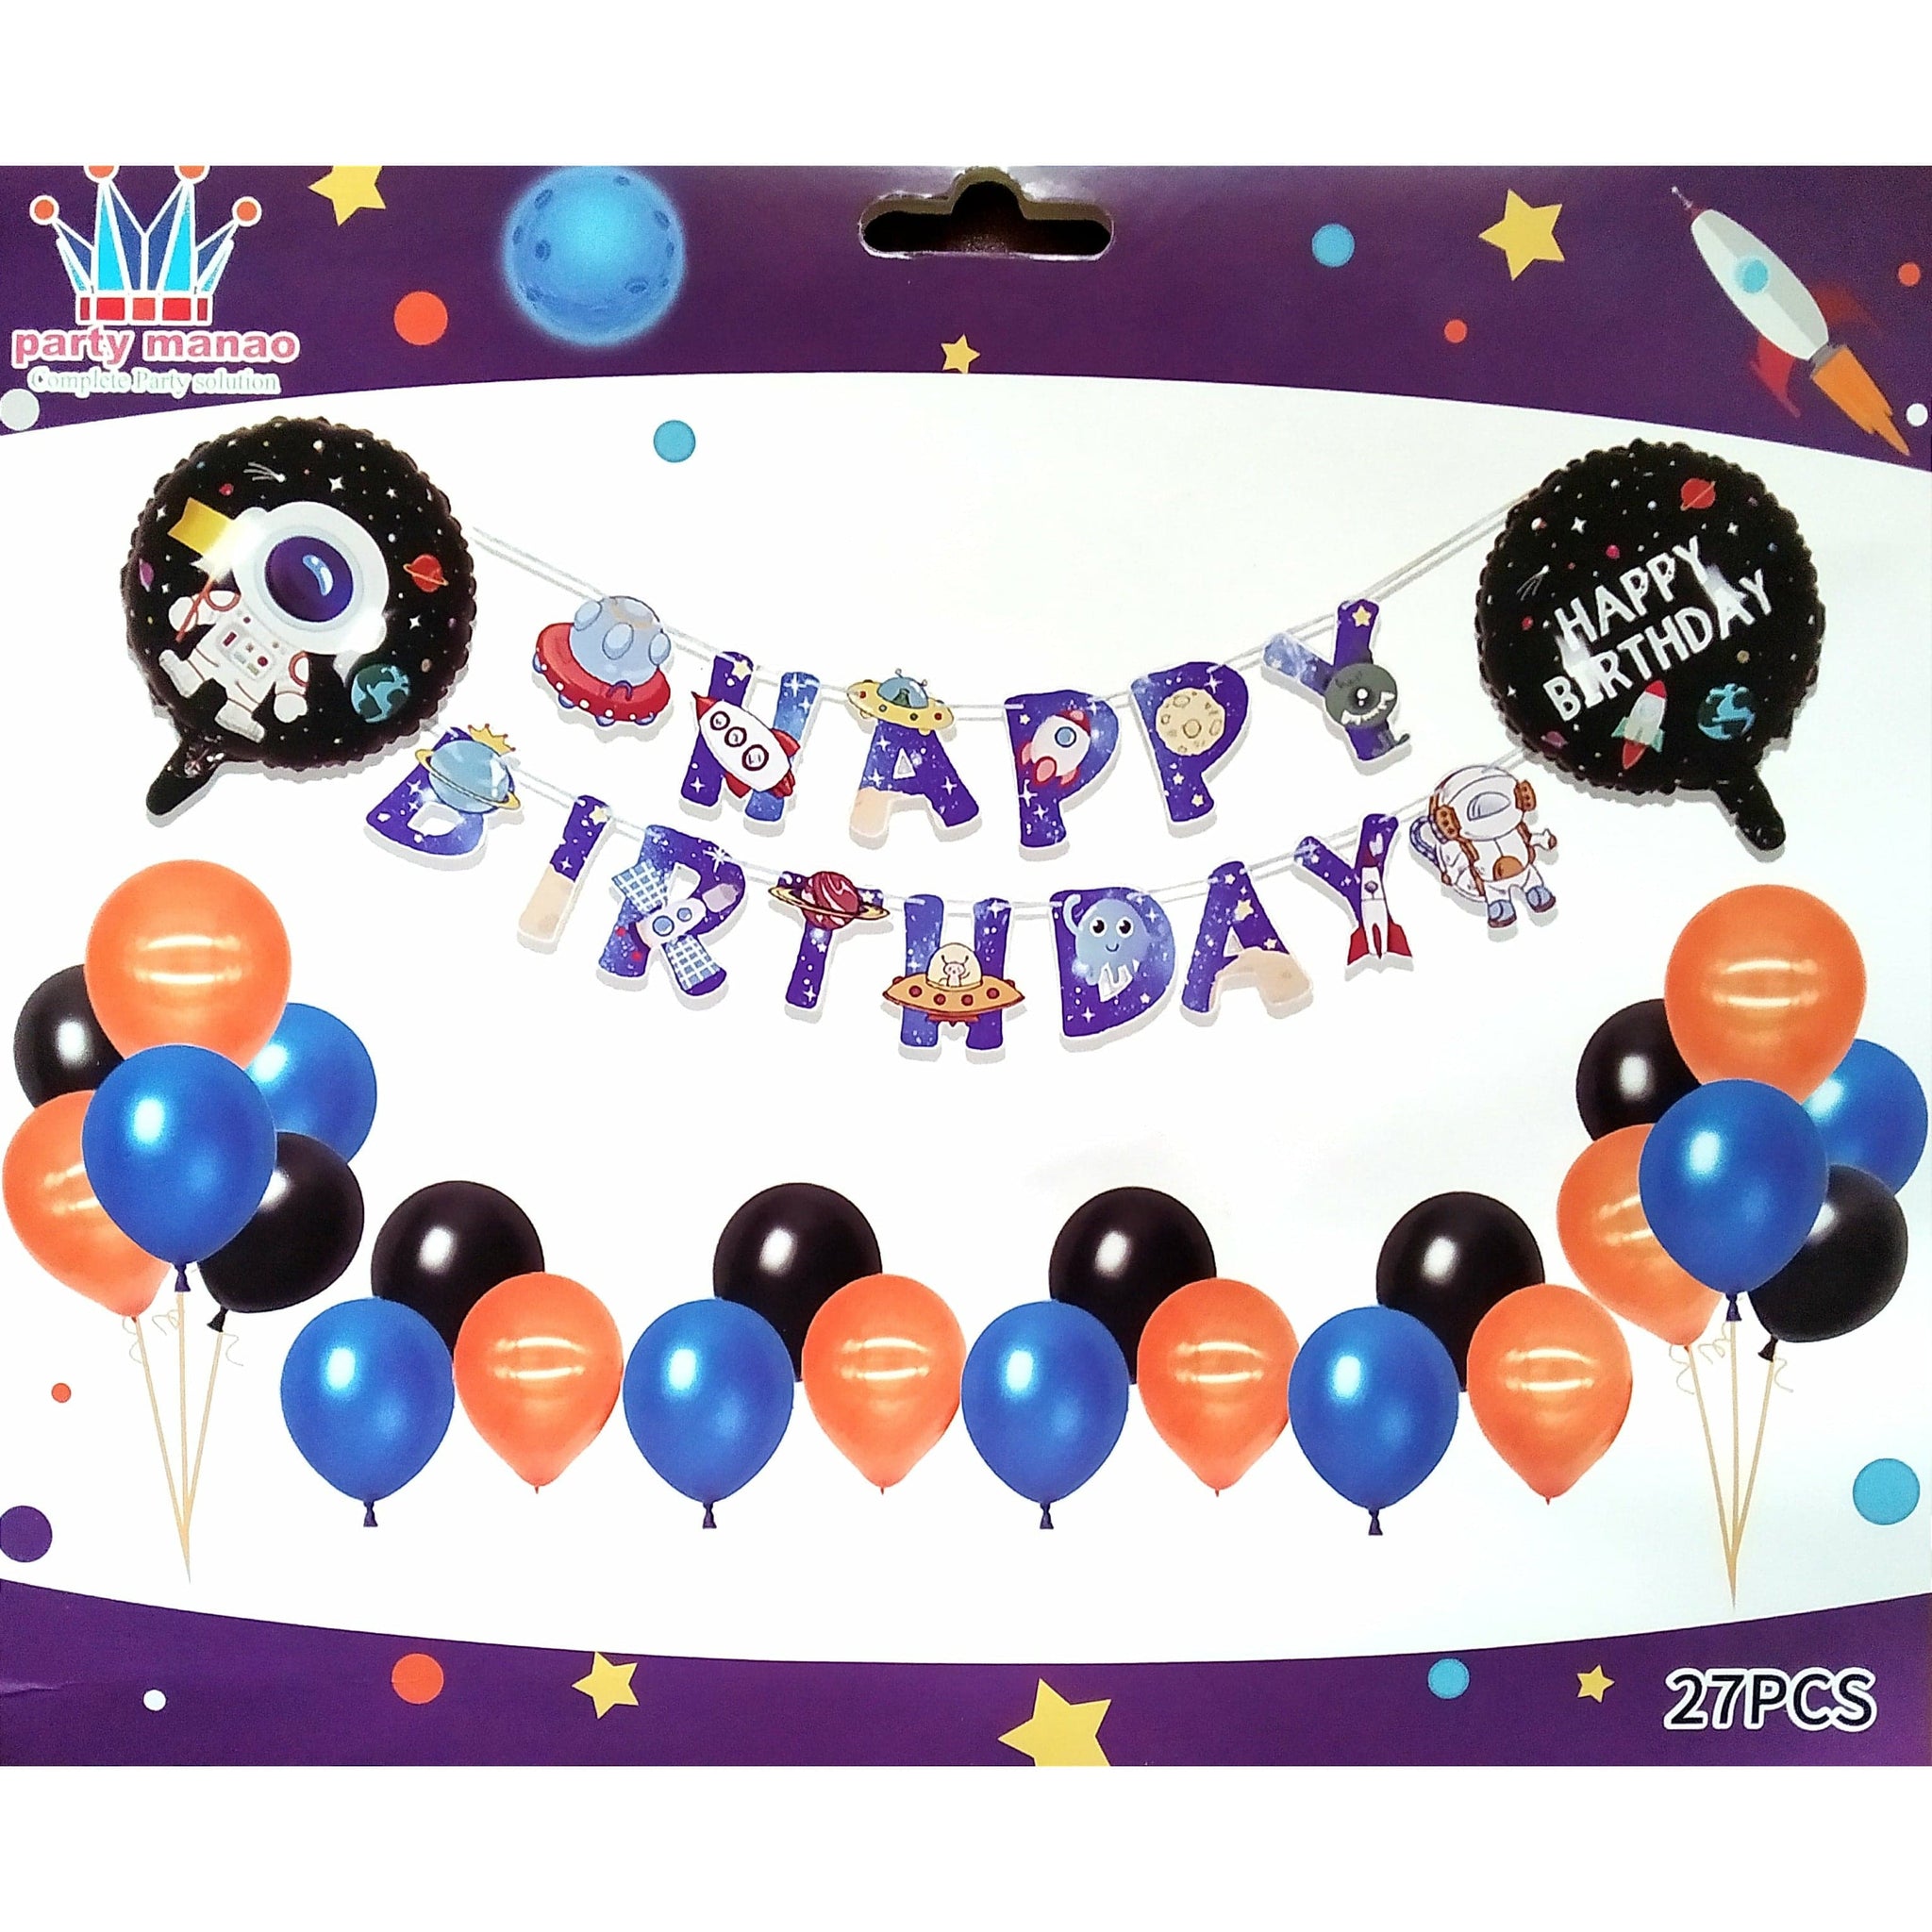 Varsha Toys, parshwa shop Happy birthday banner and balloons set